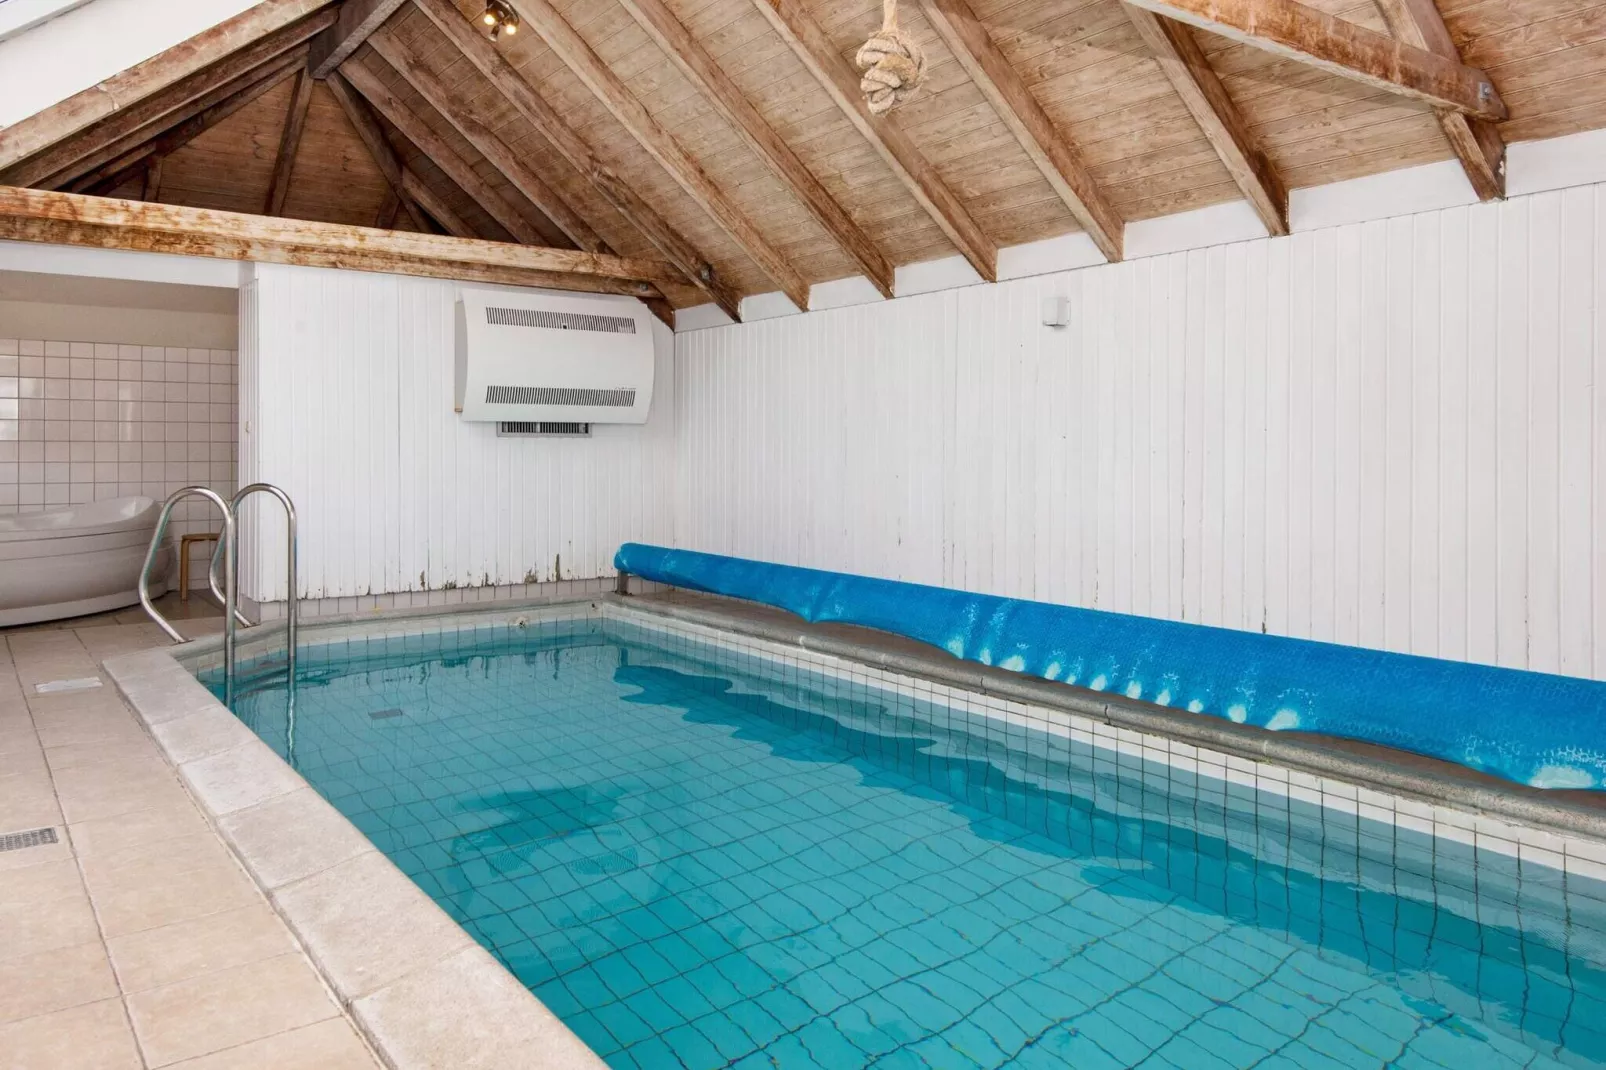 Ruim 12-persoons vakantiehuis in Hvide Sande met sauna